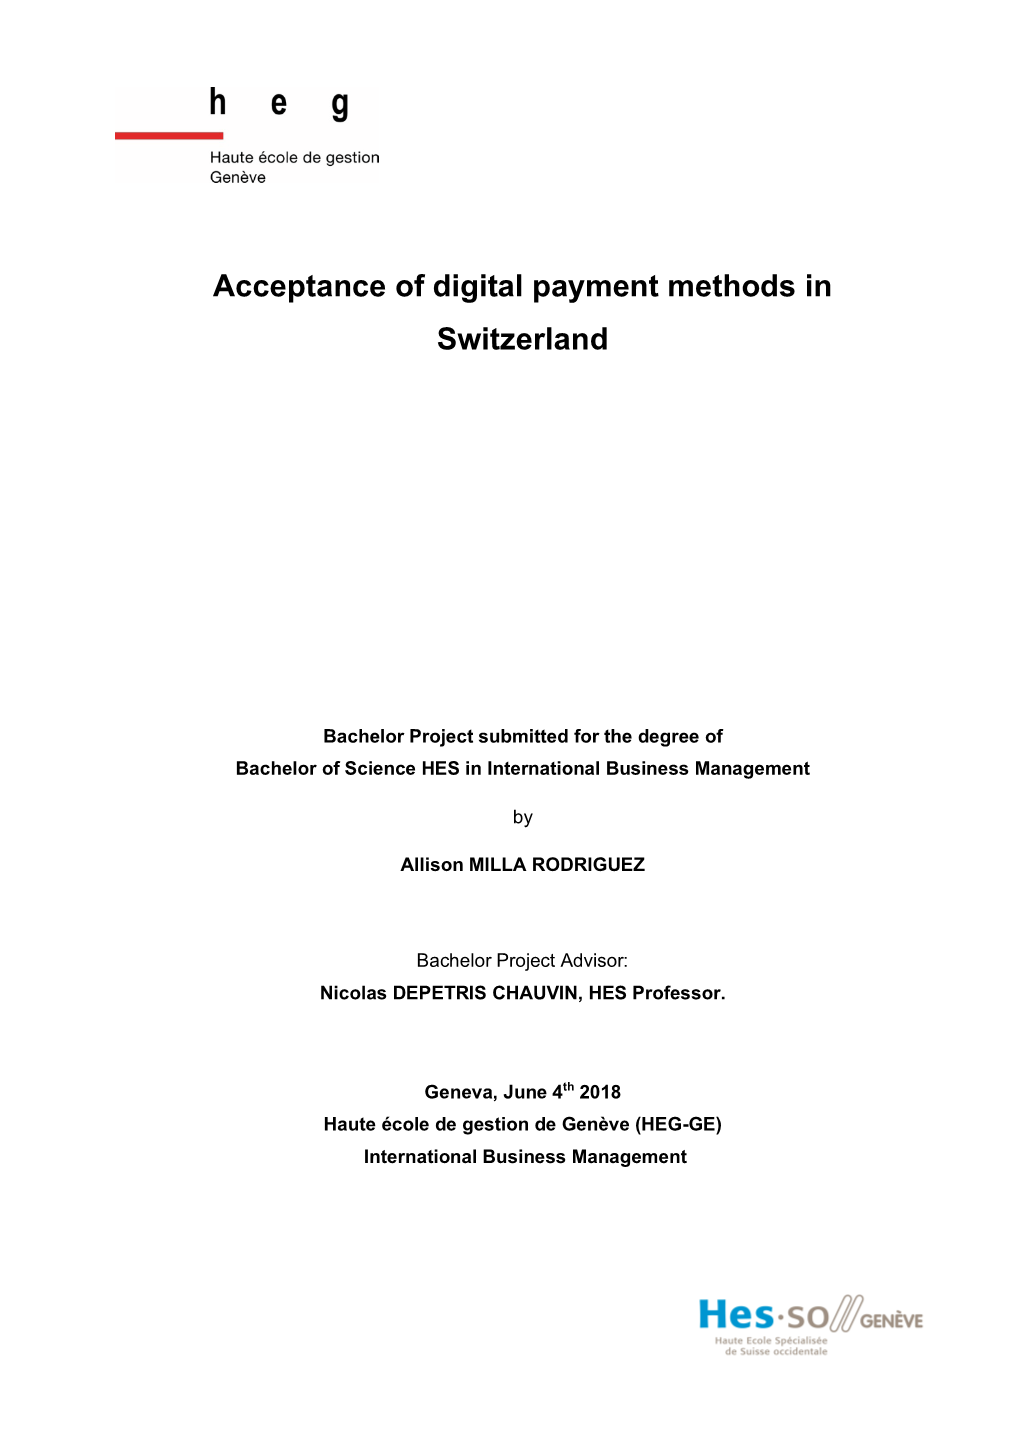 Acceptance of Digital Payment Methods in Switzerland